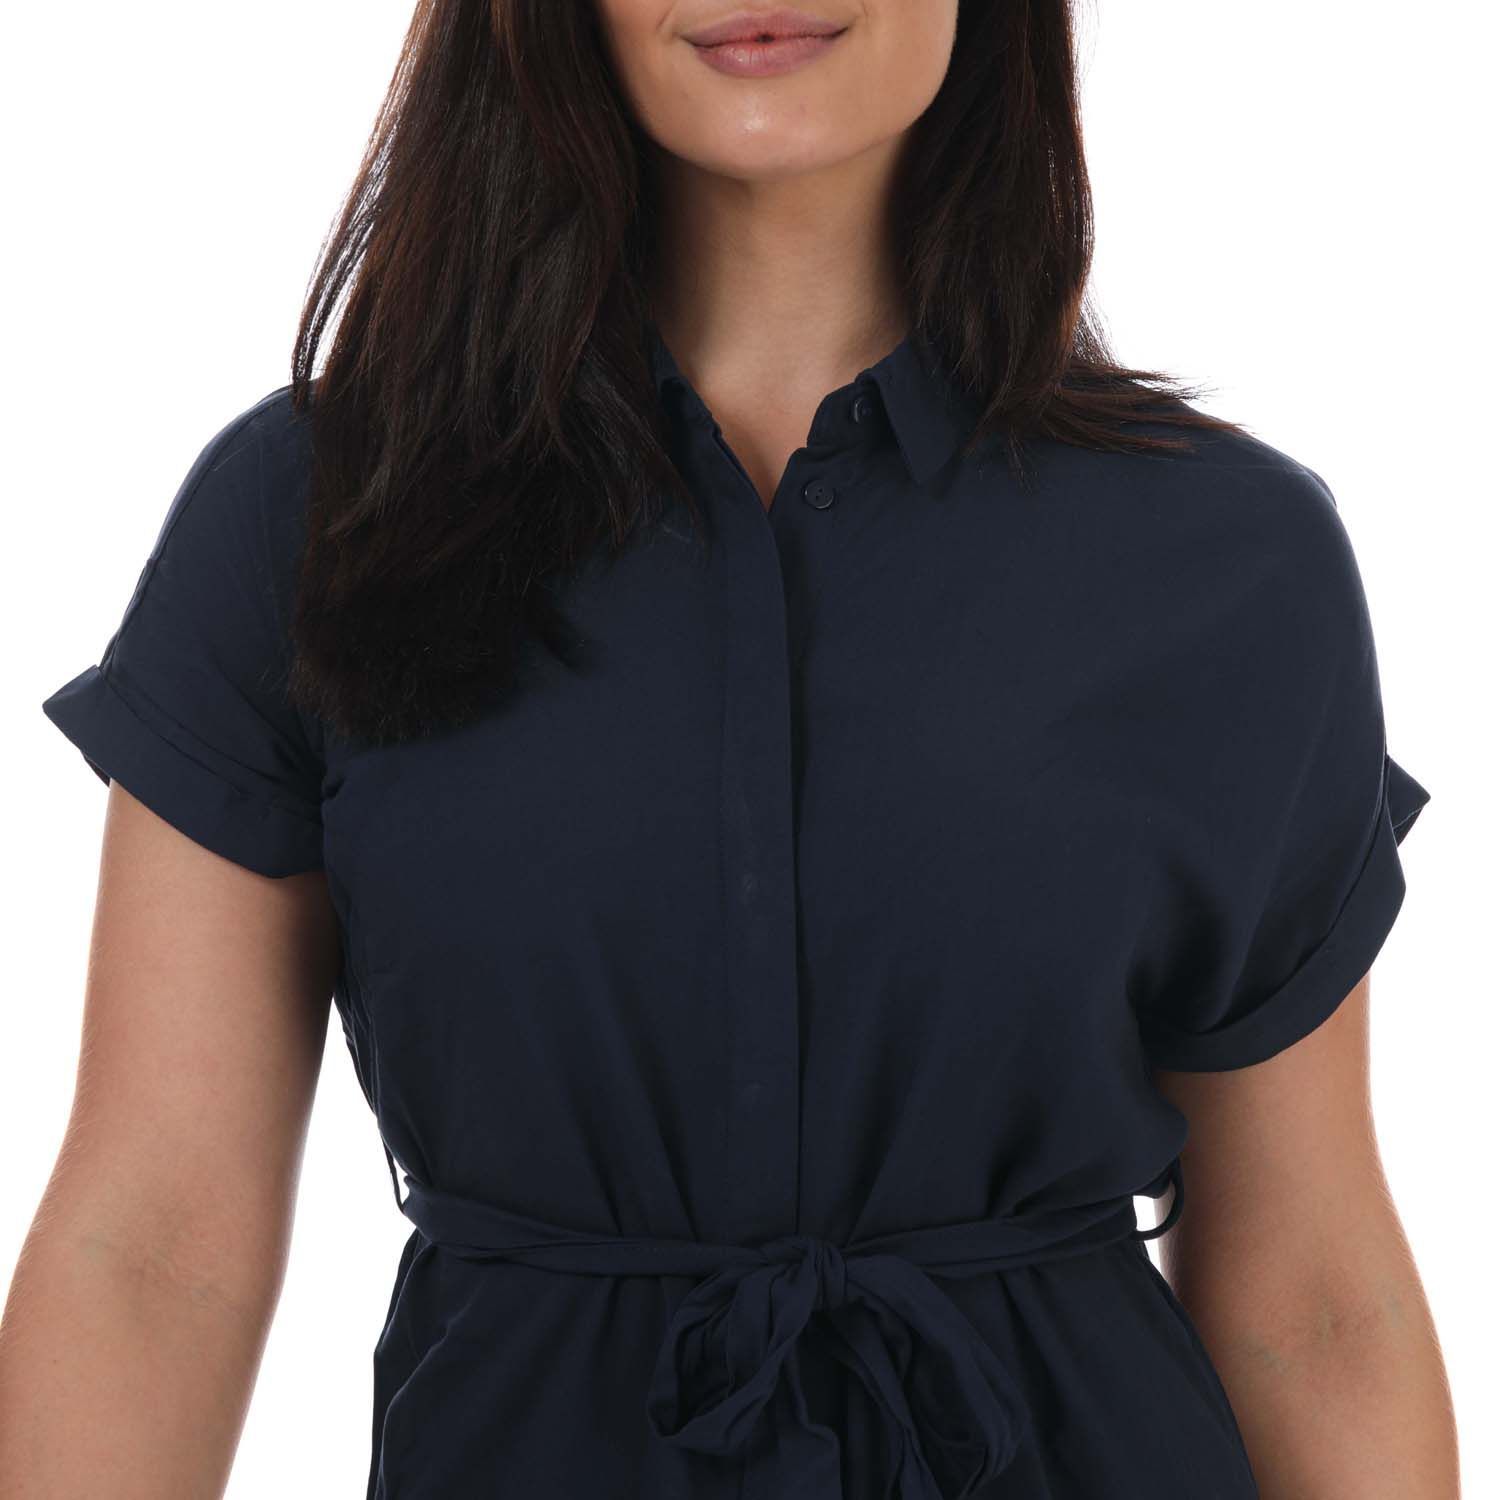 Womens Vero Moda Easy SS Shirt Dress in navy.- Shirt collar.- Hidden button closure.- Turn up details at the sleeves.- Belt at the waist.- Soft viscose material.- Regular fit.- Body: 100% Viscose.- Ref: 10245163A